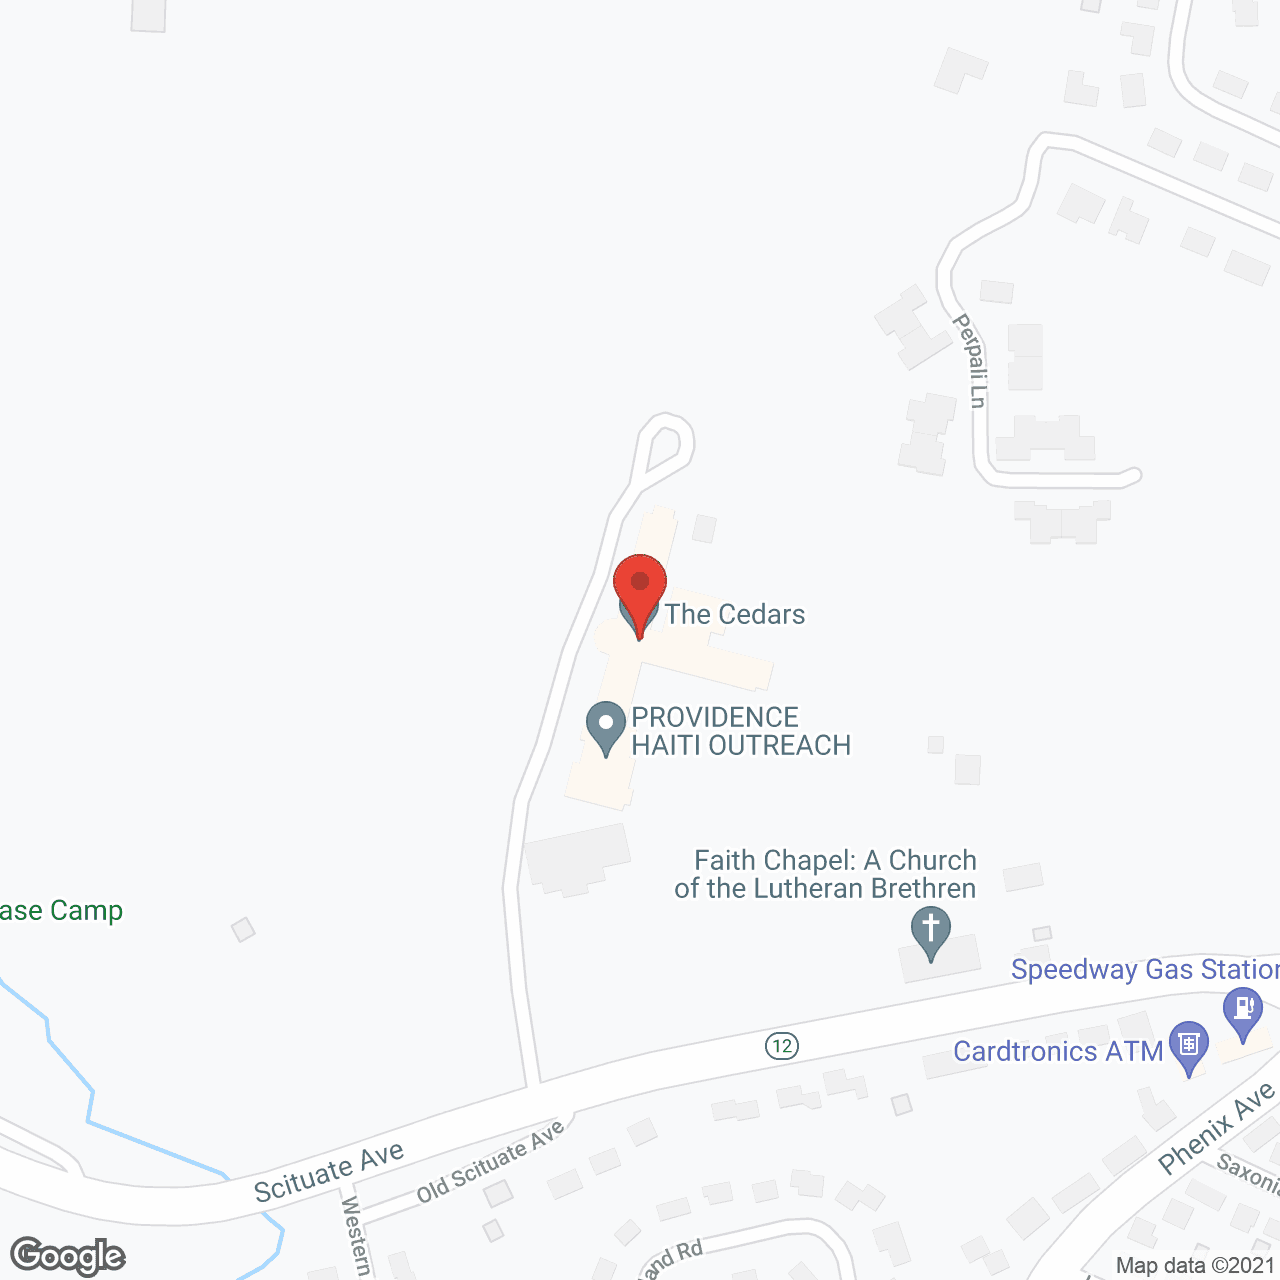 The Cedars in google map